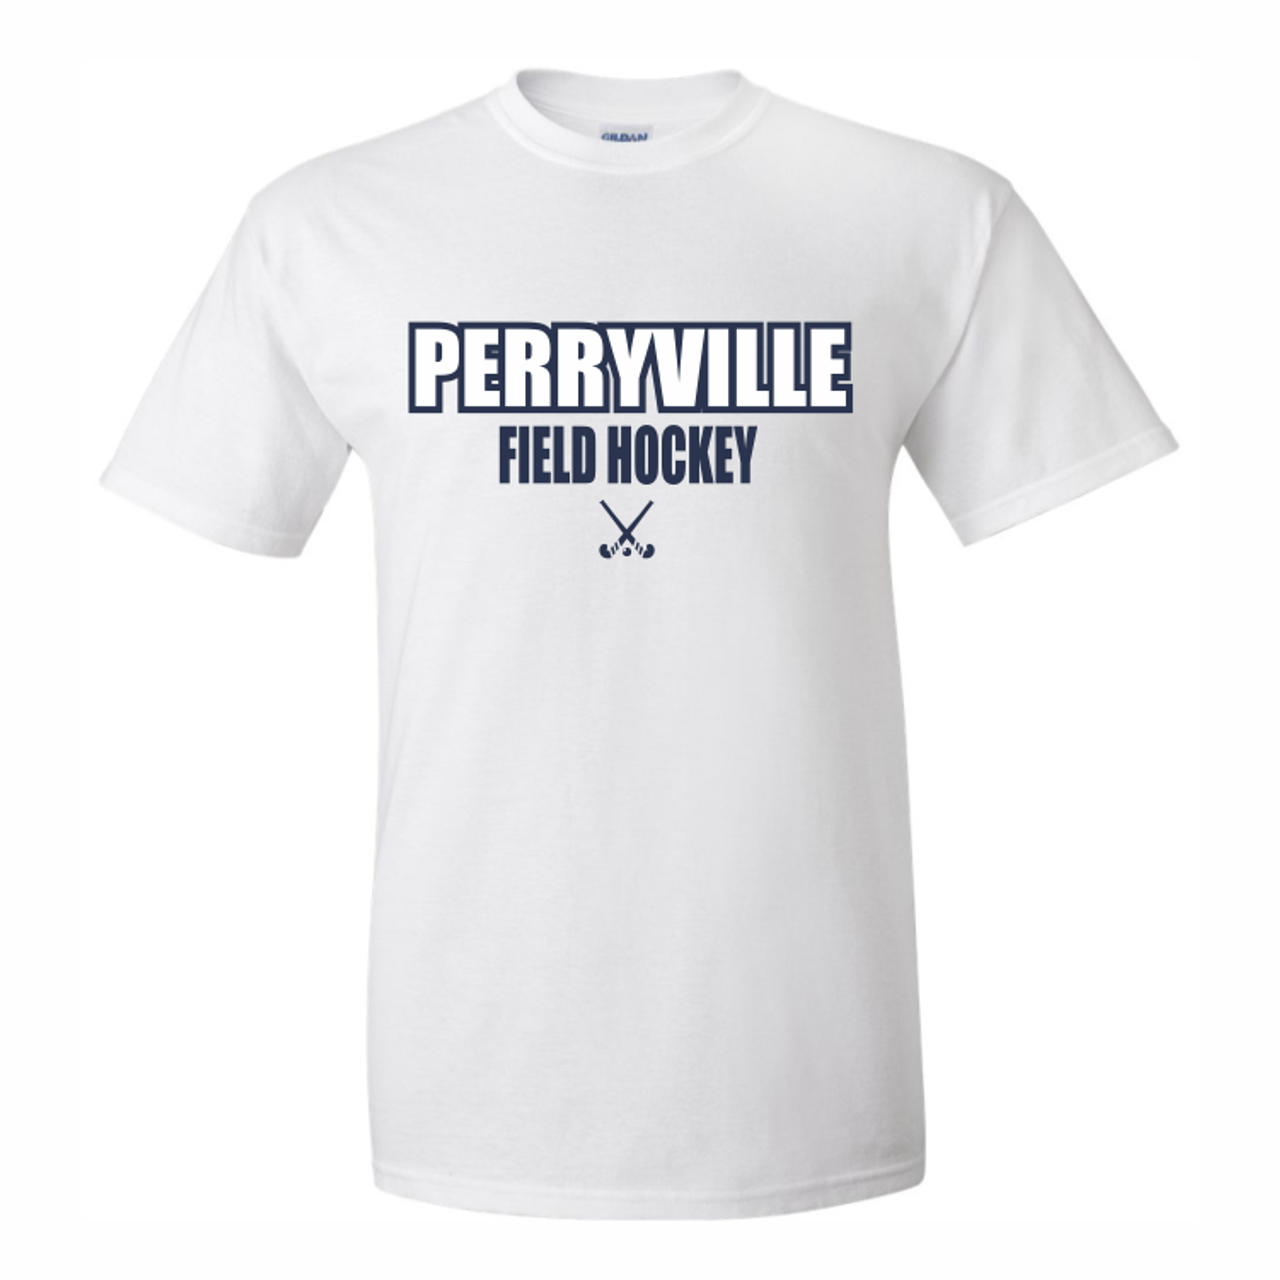 Perryville Field Hockey Cotton Tee, White